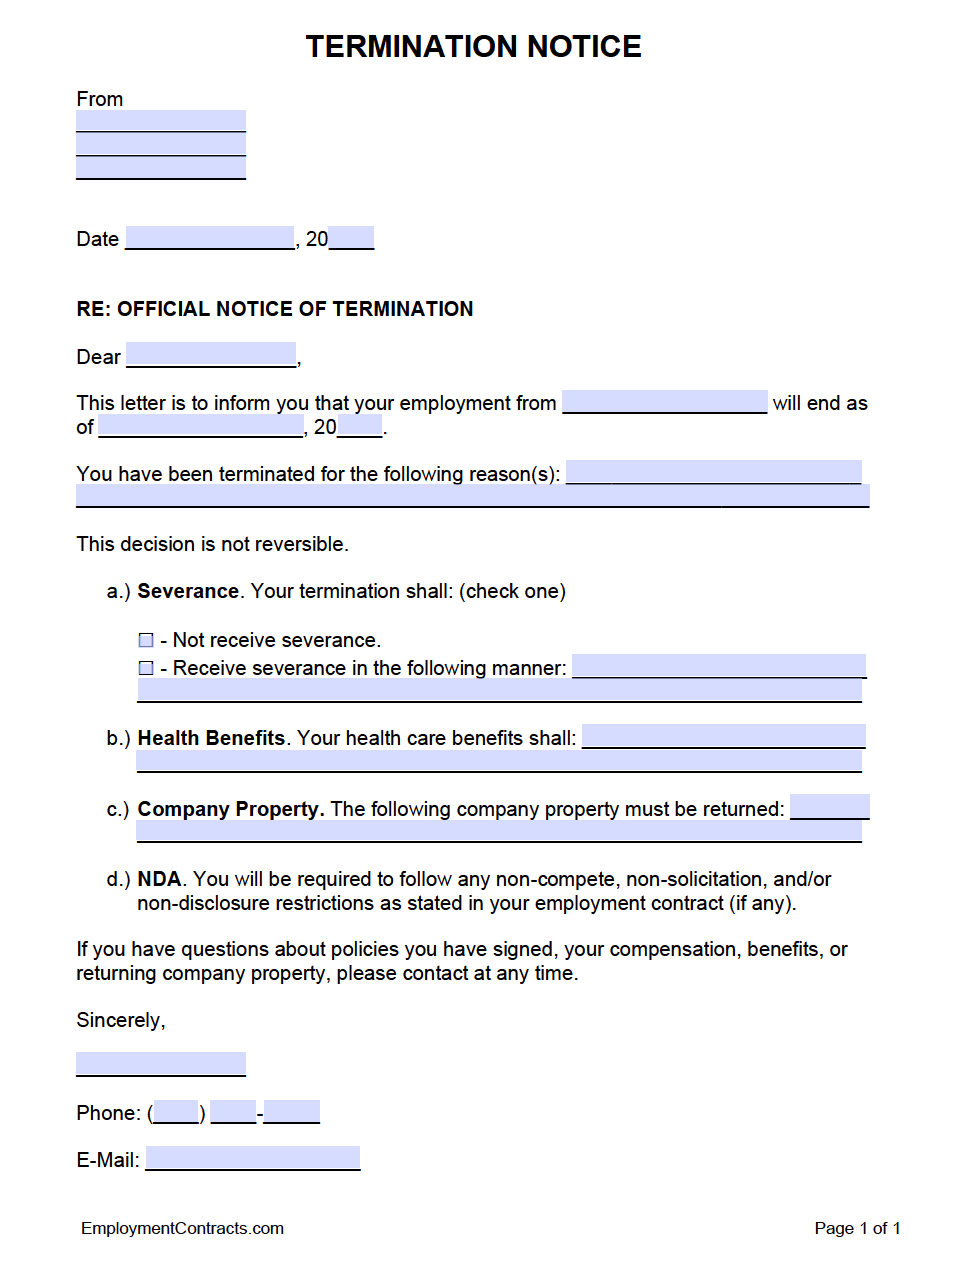 employee-termination-letter-pdf-word